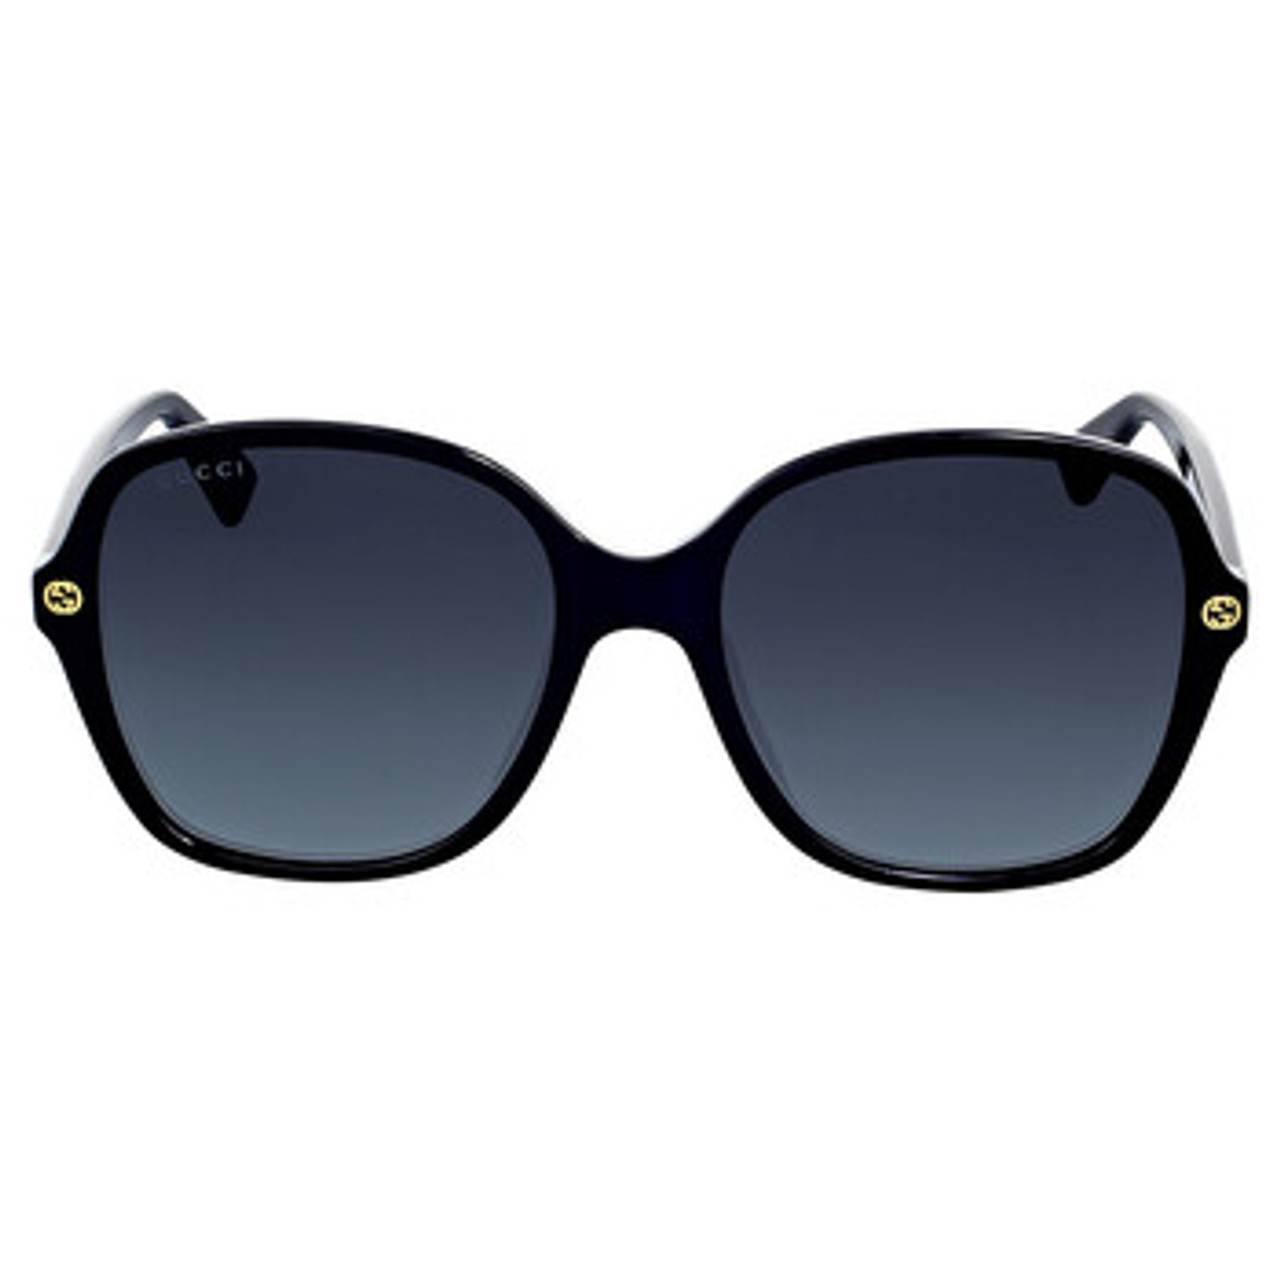 Gucci sunglasses for women | Sunglasses, Sunglasses women, Gucci eyewear